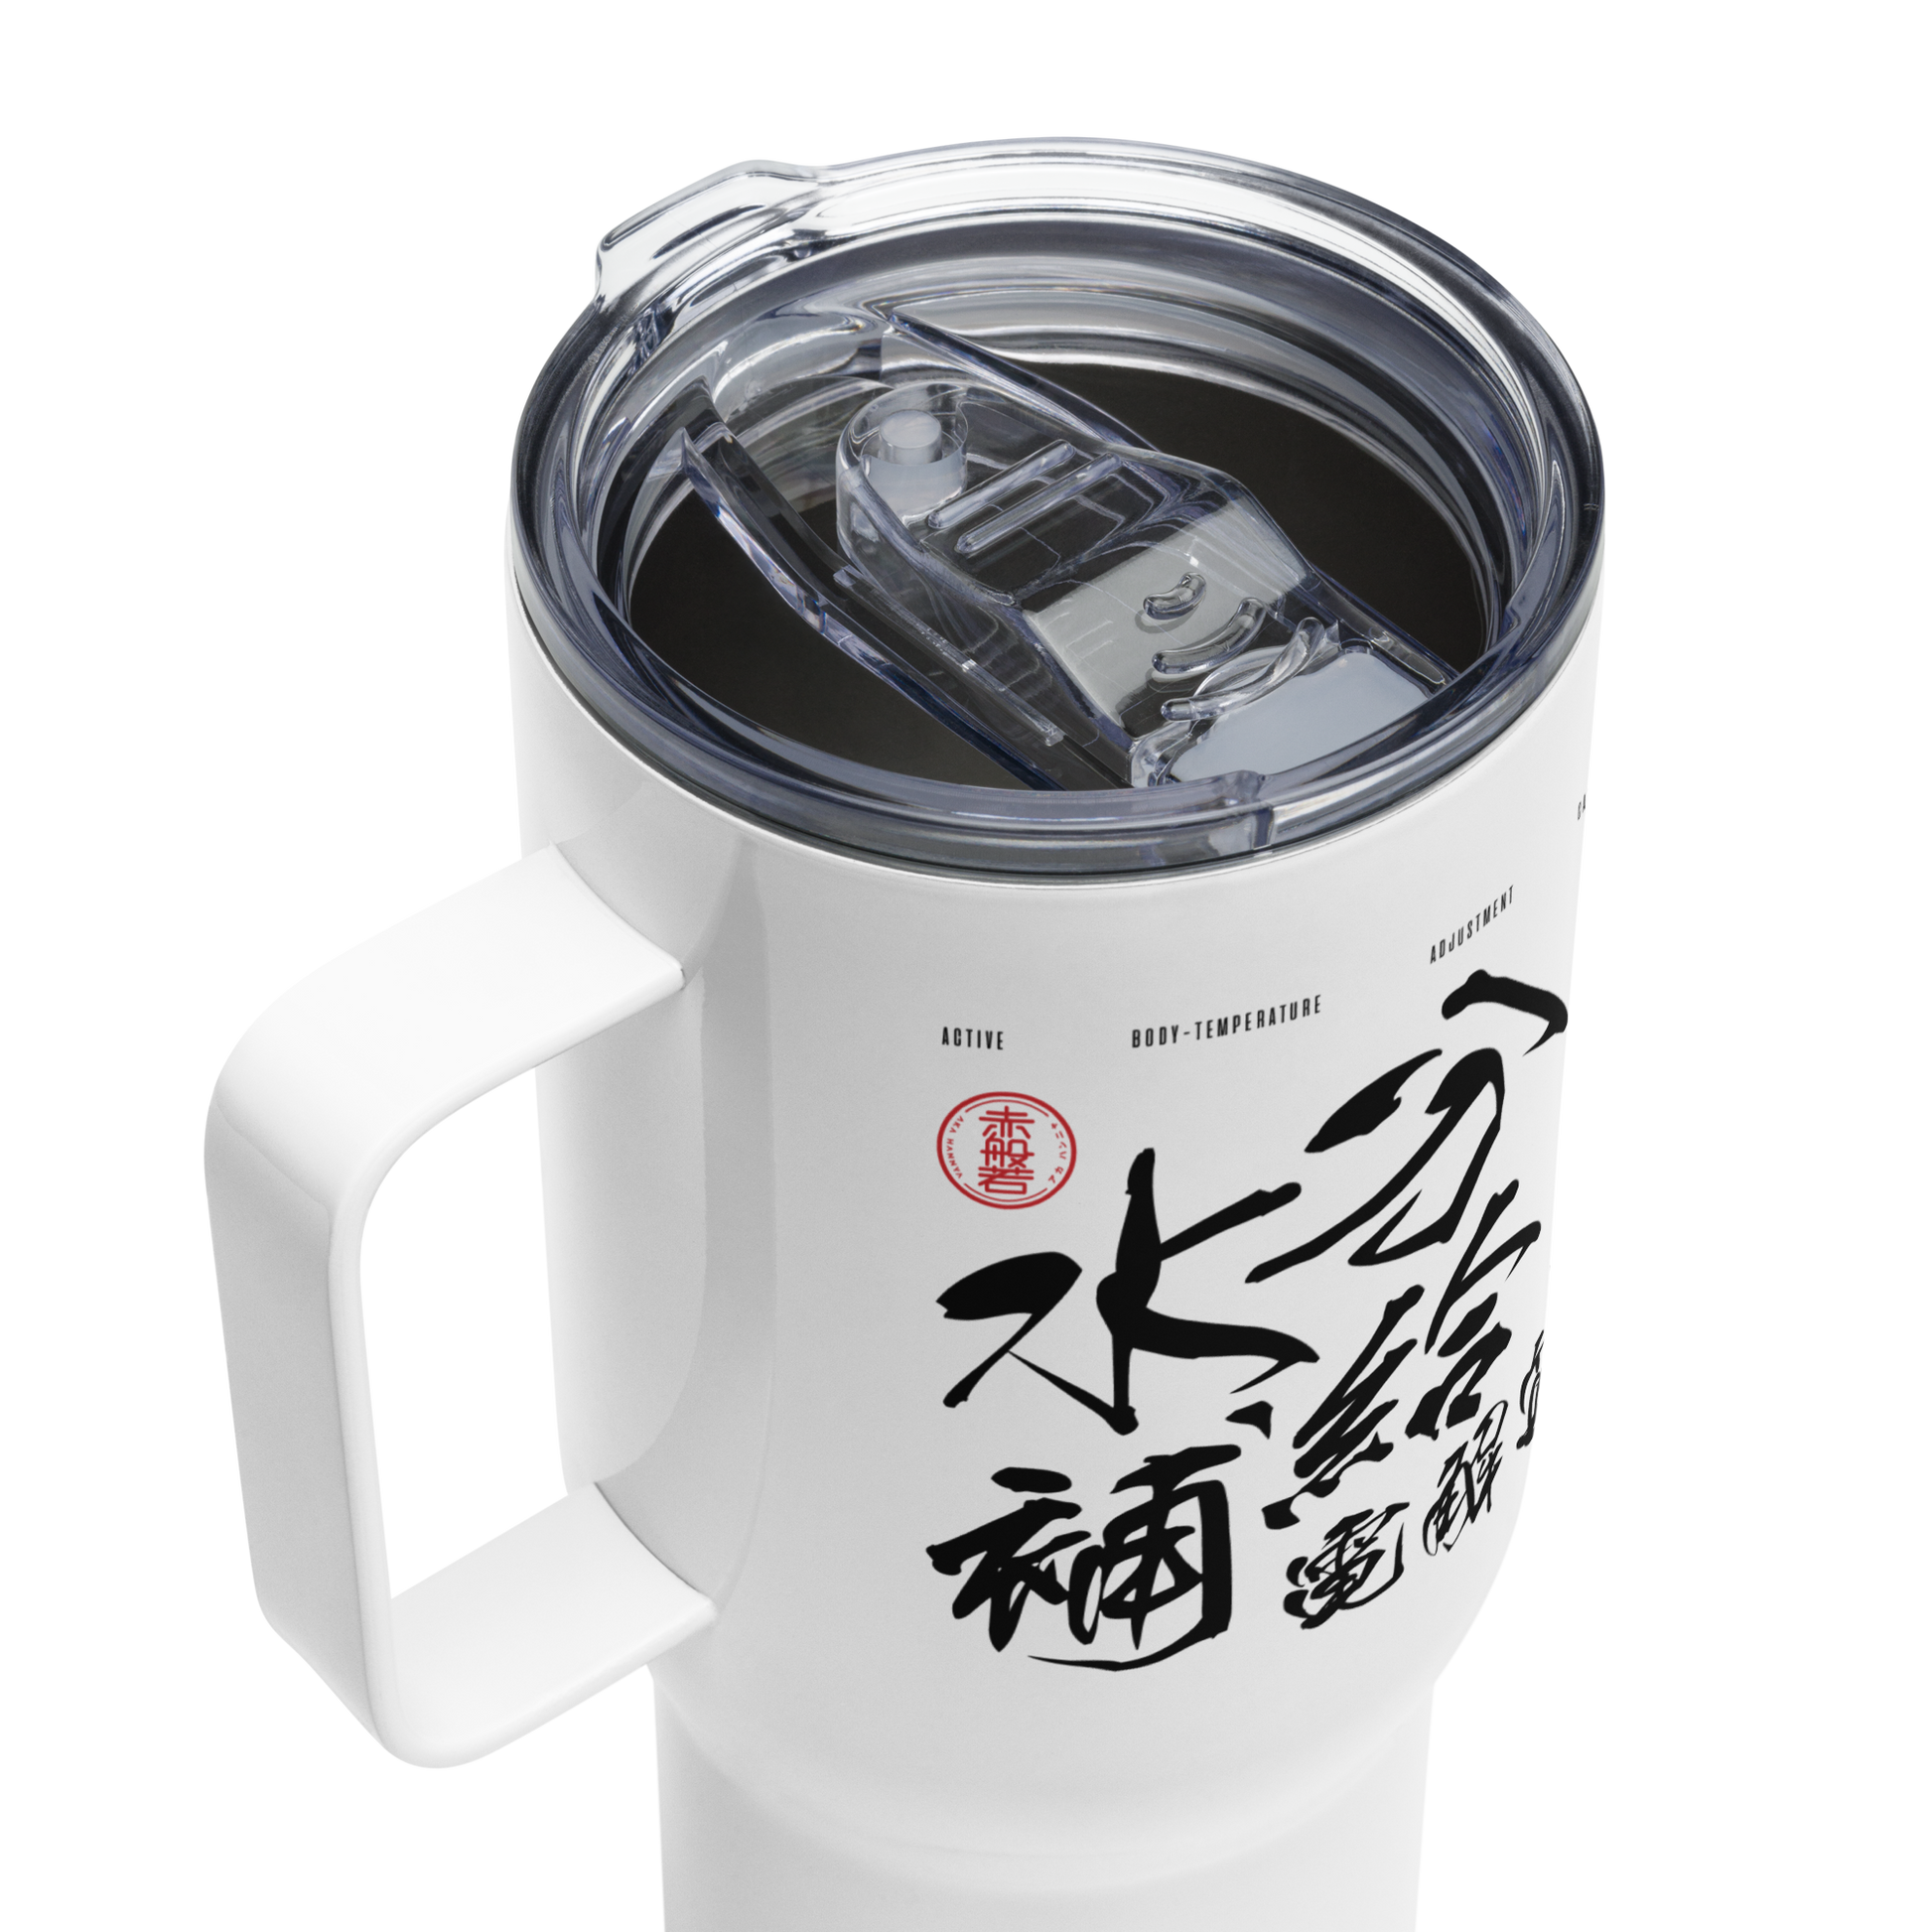 25oz white travel mug with handle close up on transparent background